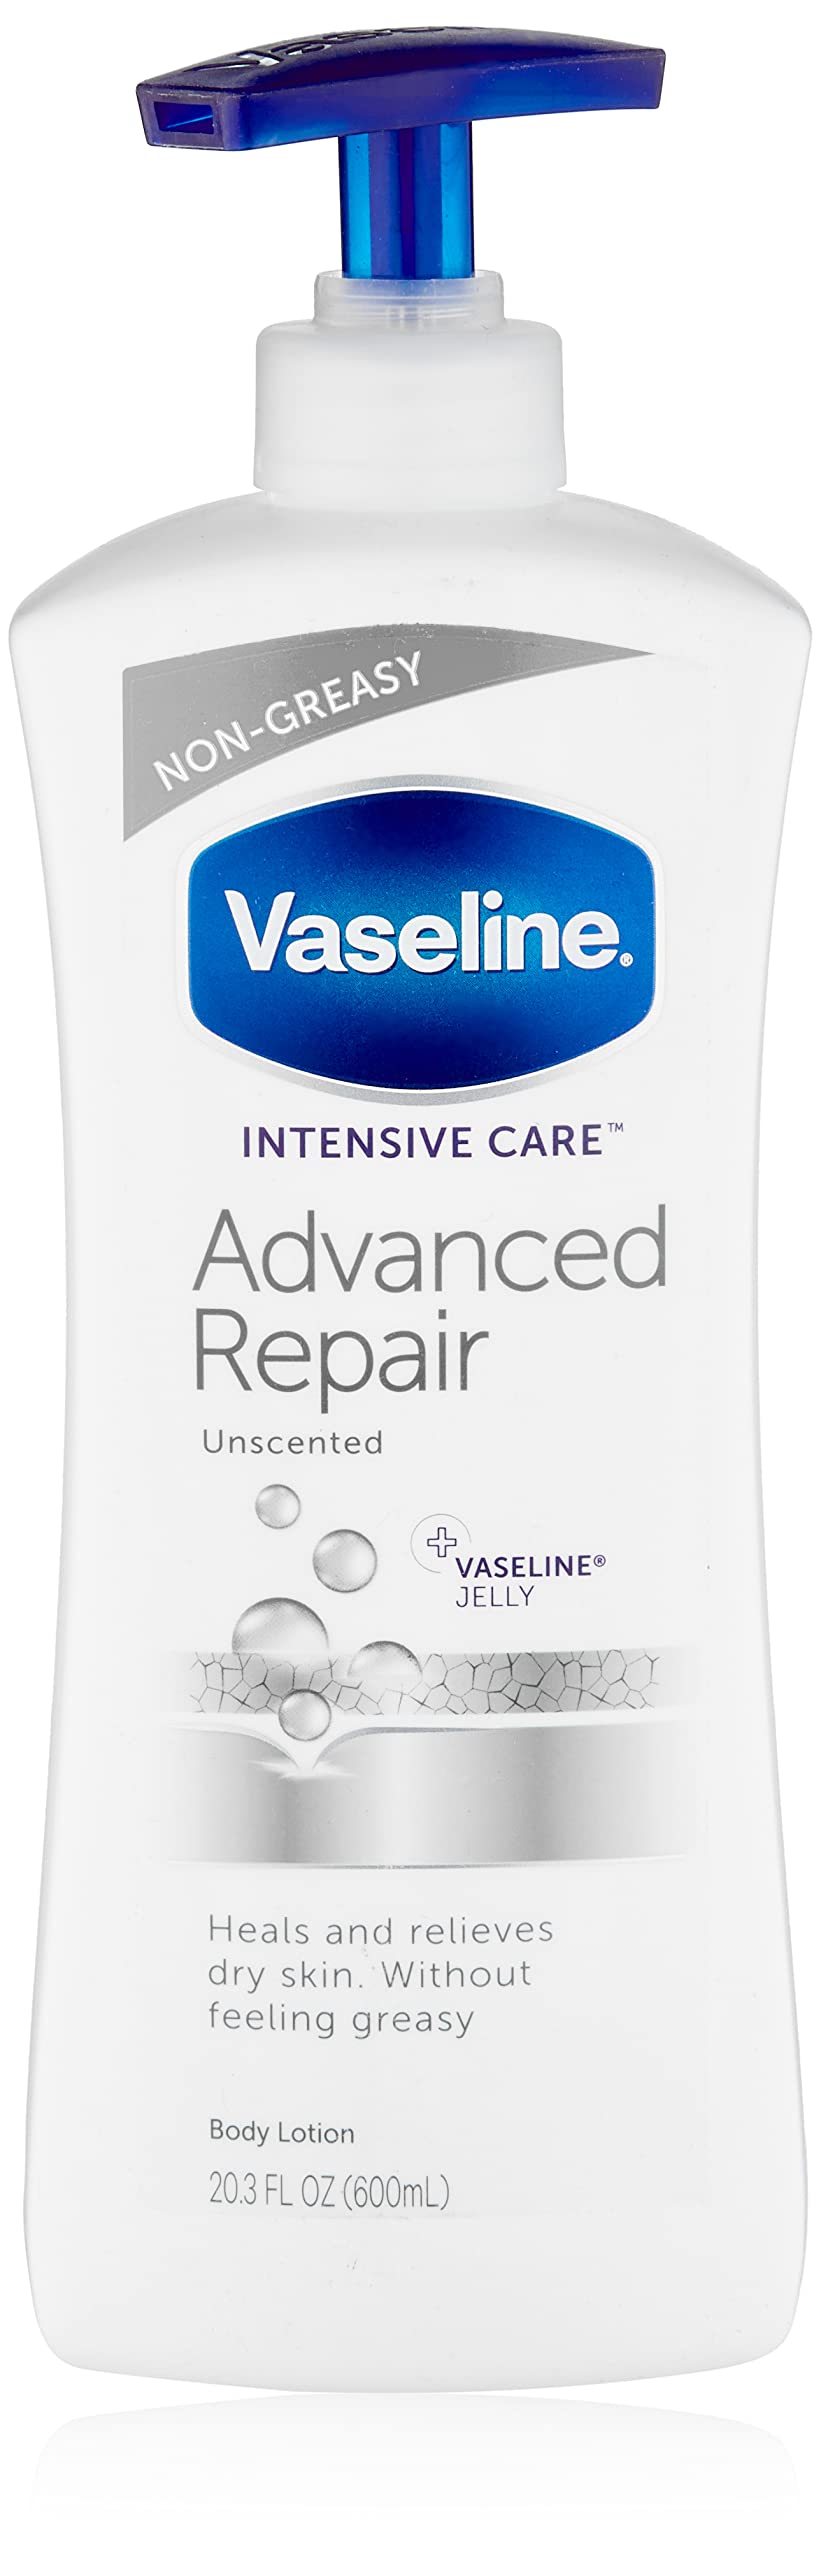 Lotion Vaseline® Intensive Care®